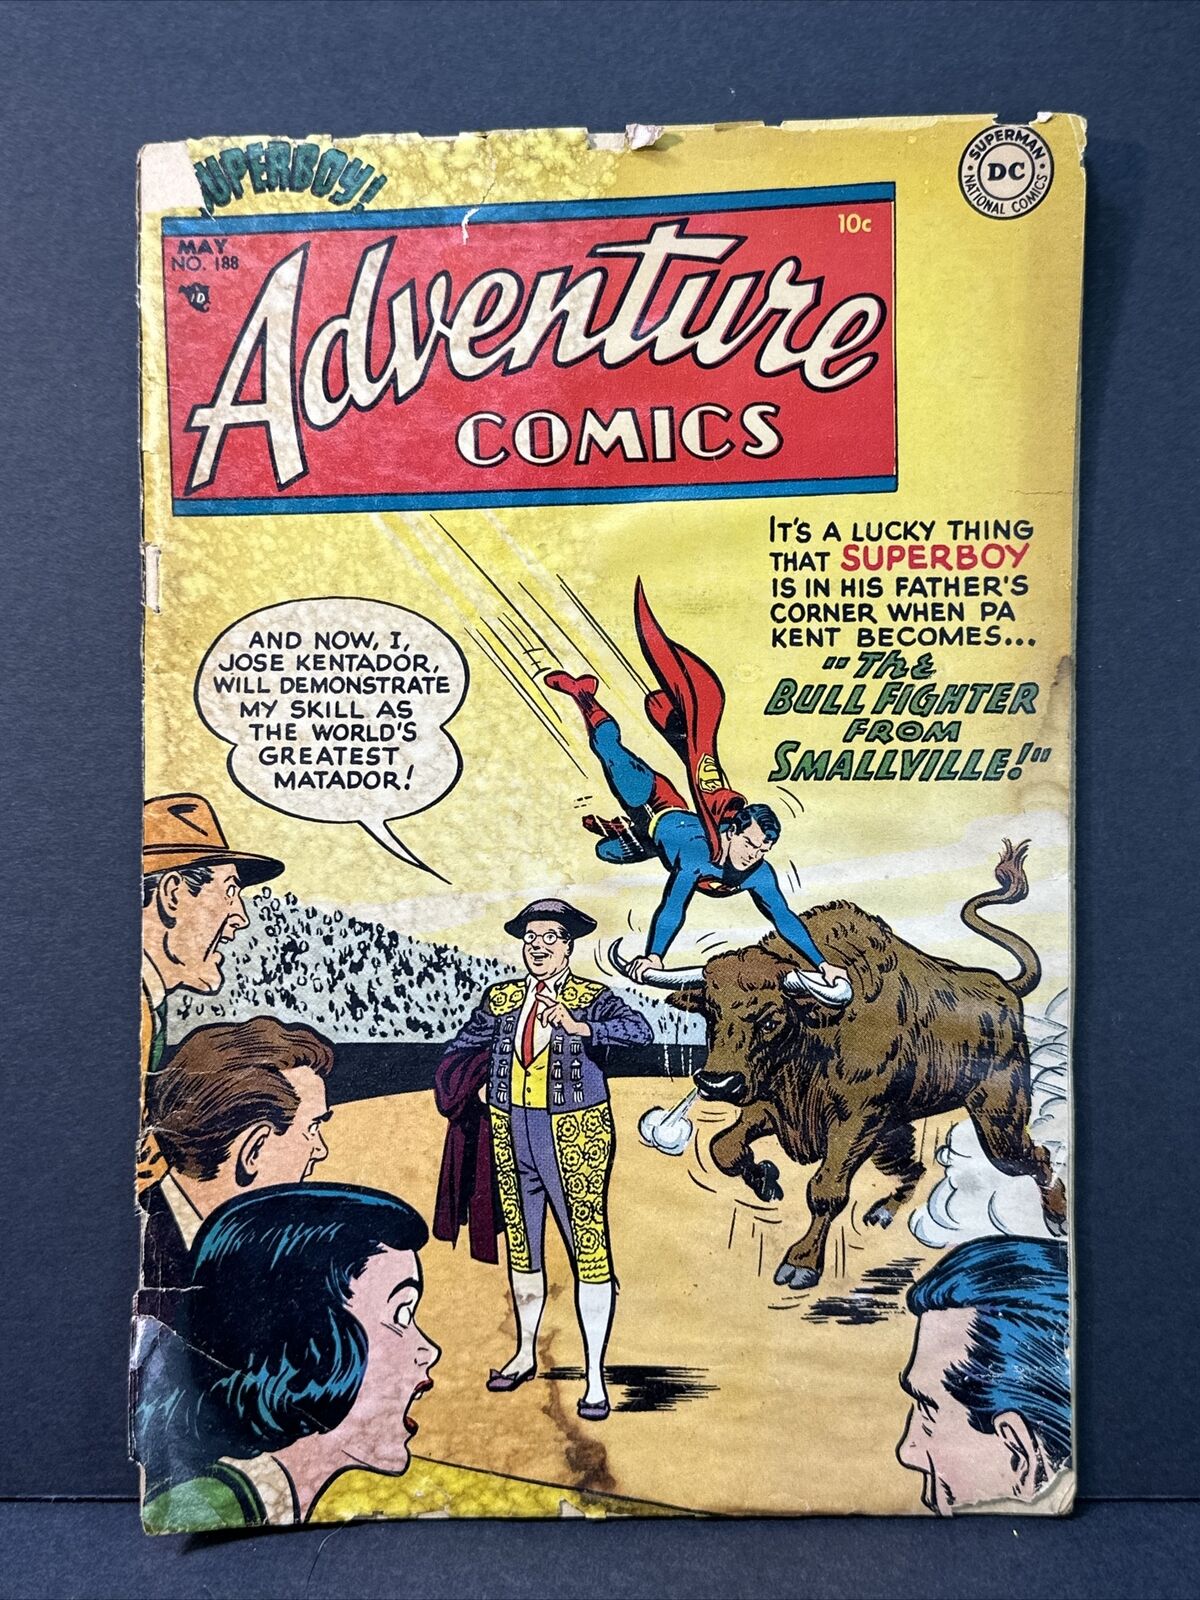 Adventure Comics #188 - The Bullfighter from Smallville (DC, 1953) Poor